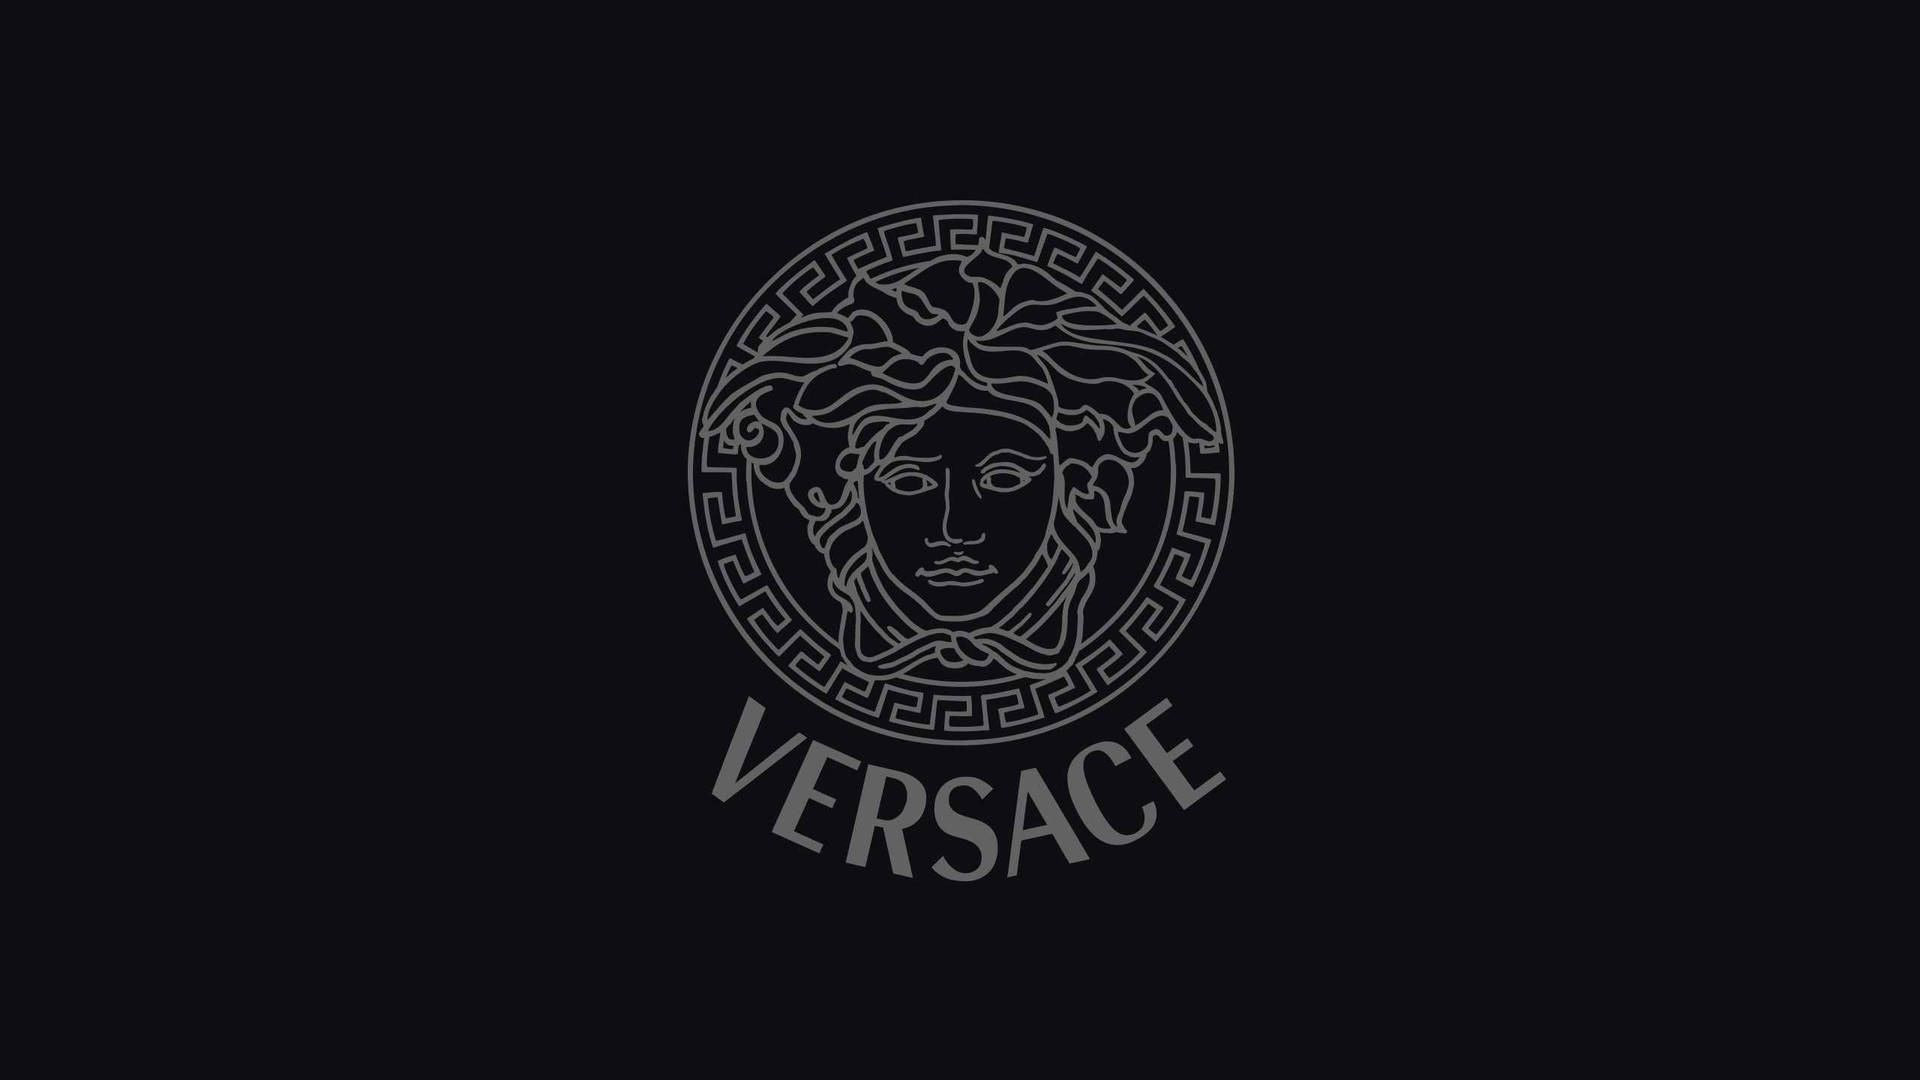 Versace White Line Logo Wallpaper